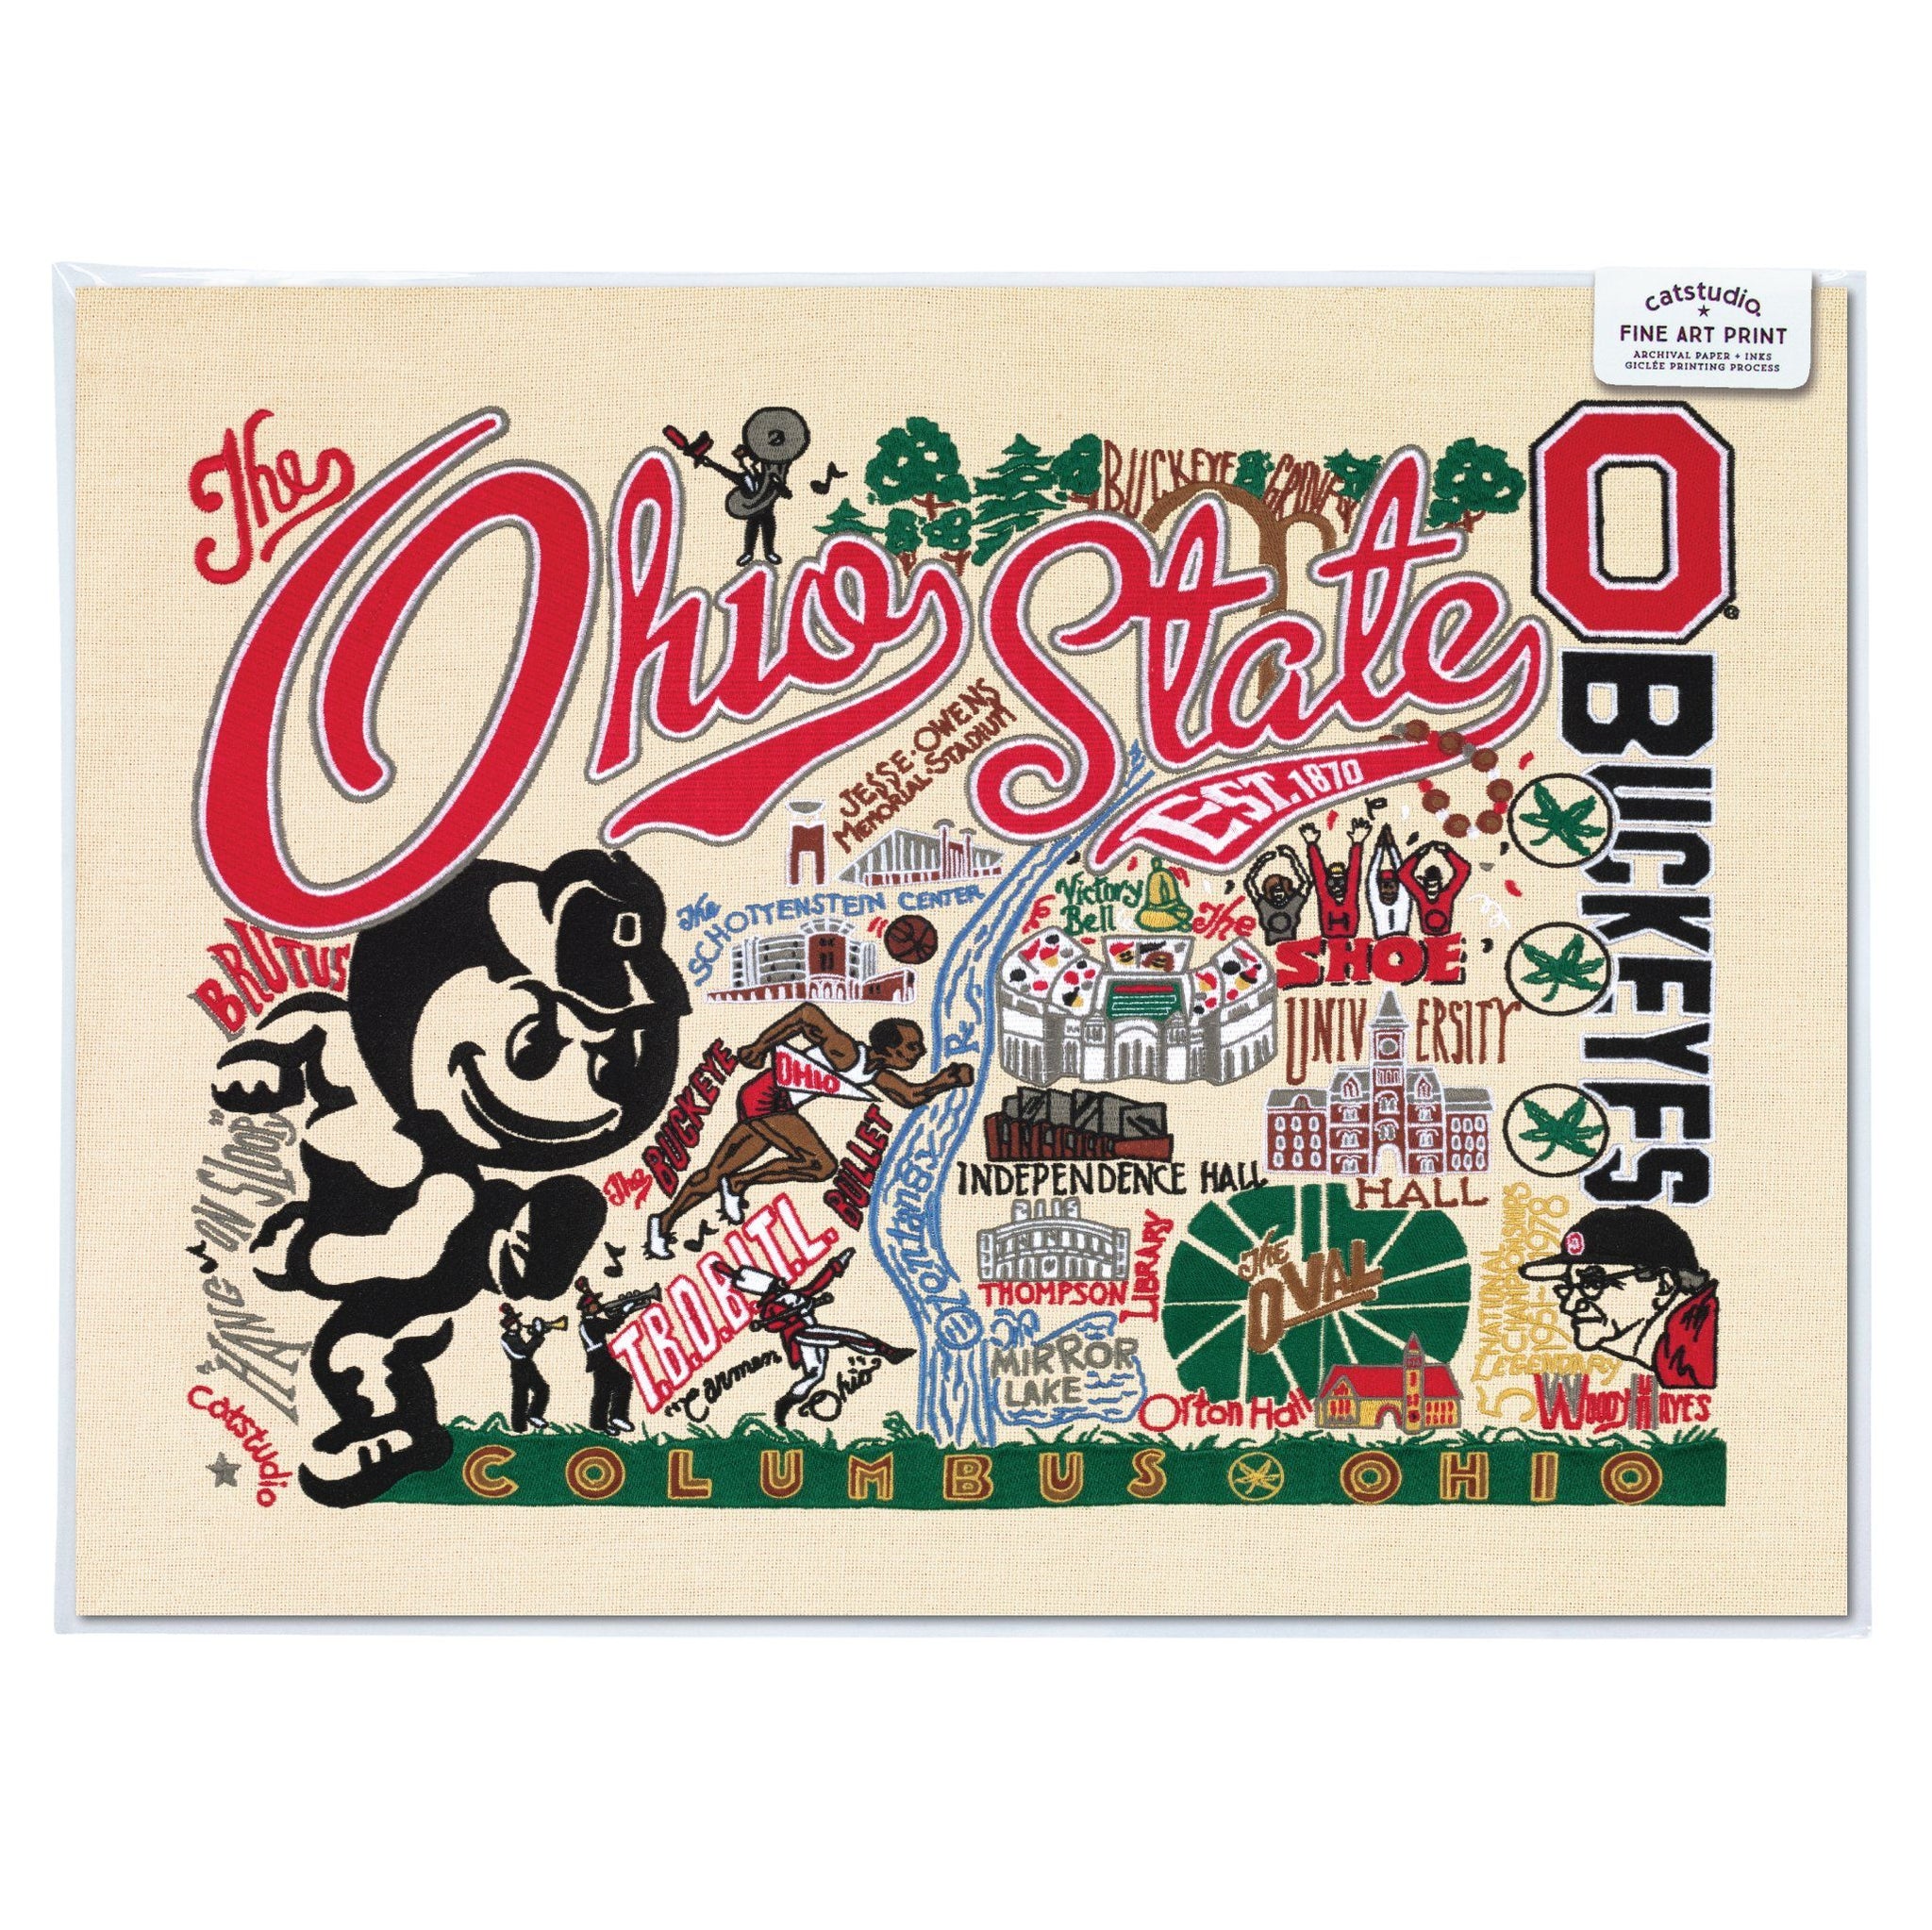 Skærpe Om indstilling Andesbjergene Ohio State University Fine Art Print | Collegiate Collection by catstudio –  catstudio